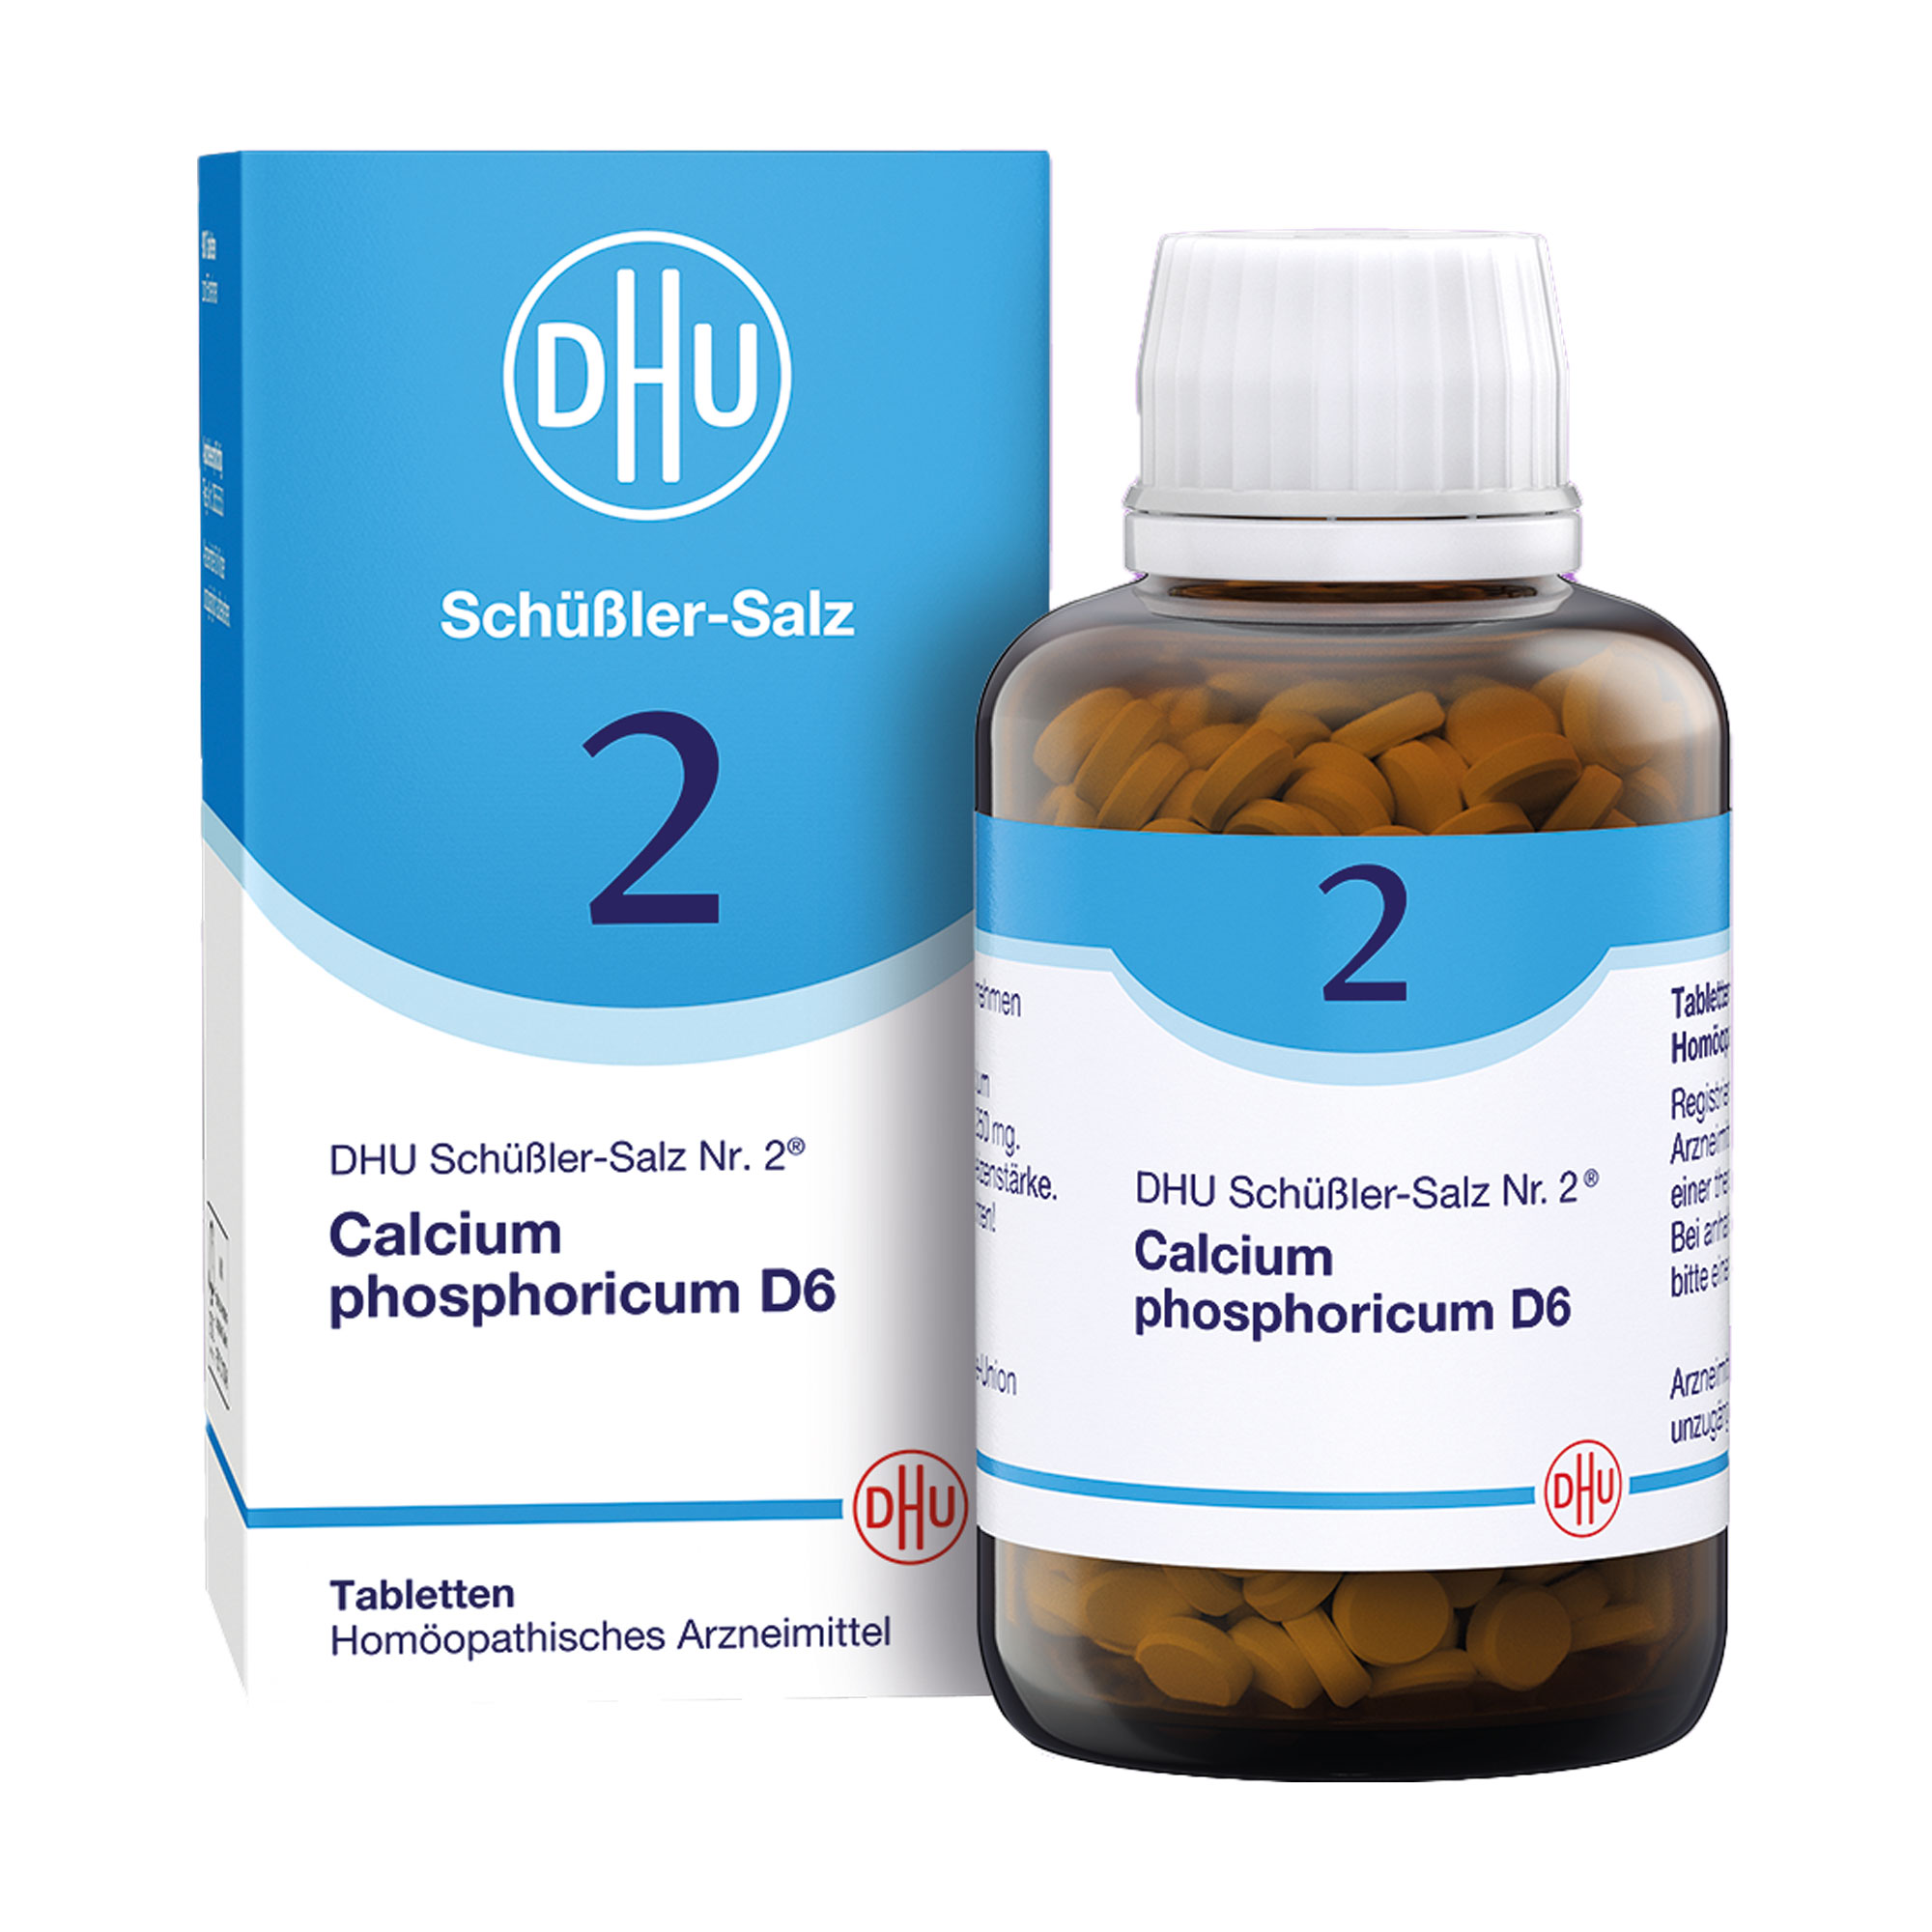 Homöopathisches Arzneimittel mit Calcium phosphoricum Trit. D6.